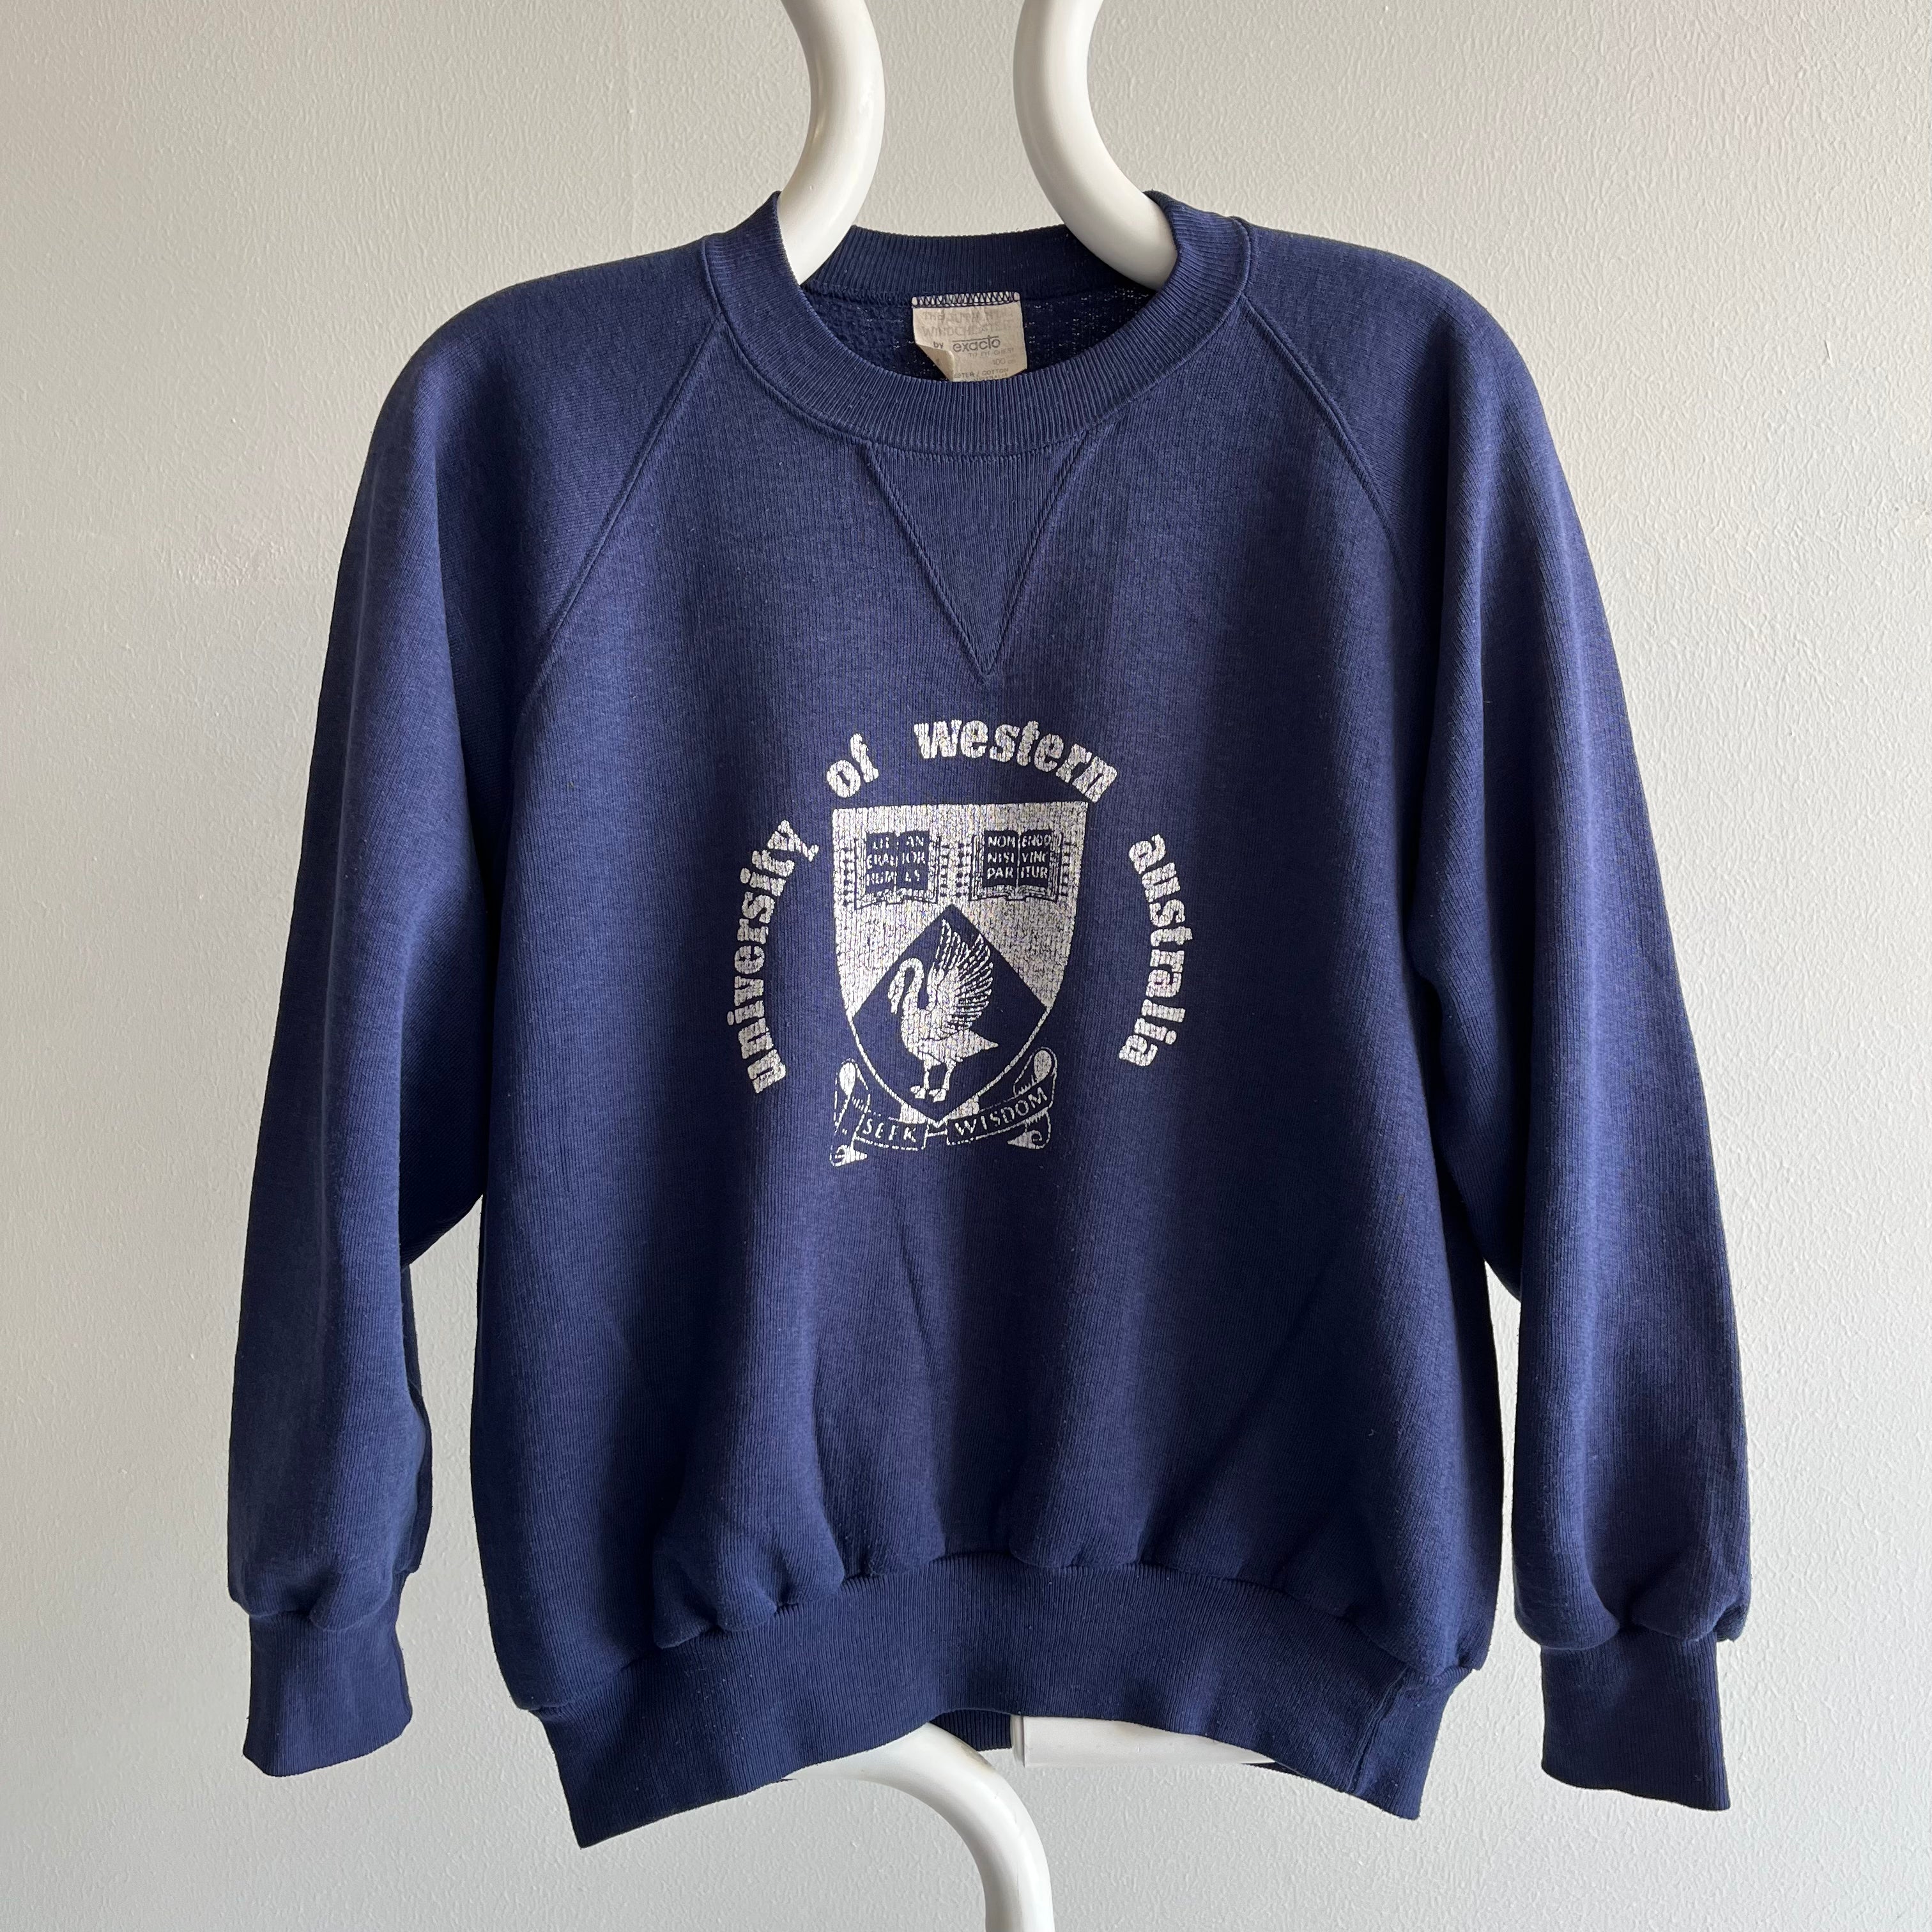 1970s University of Western Australia Faded and Worn Sweatshirt